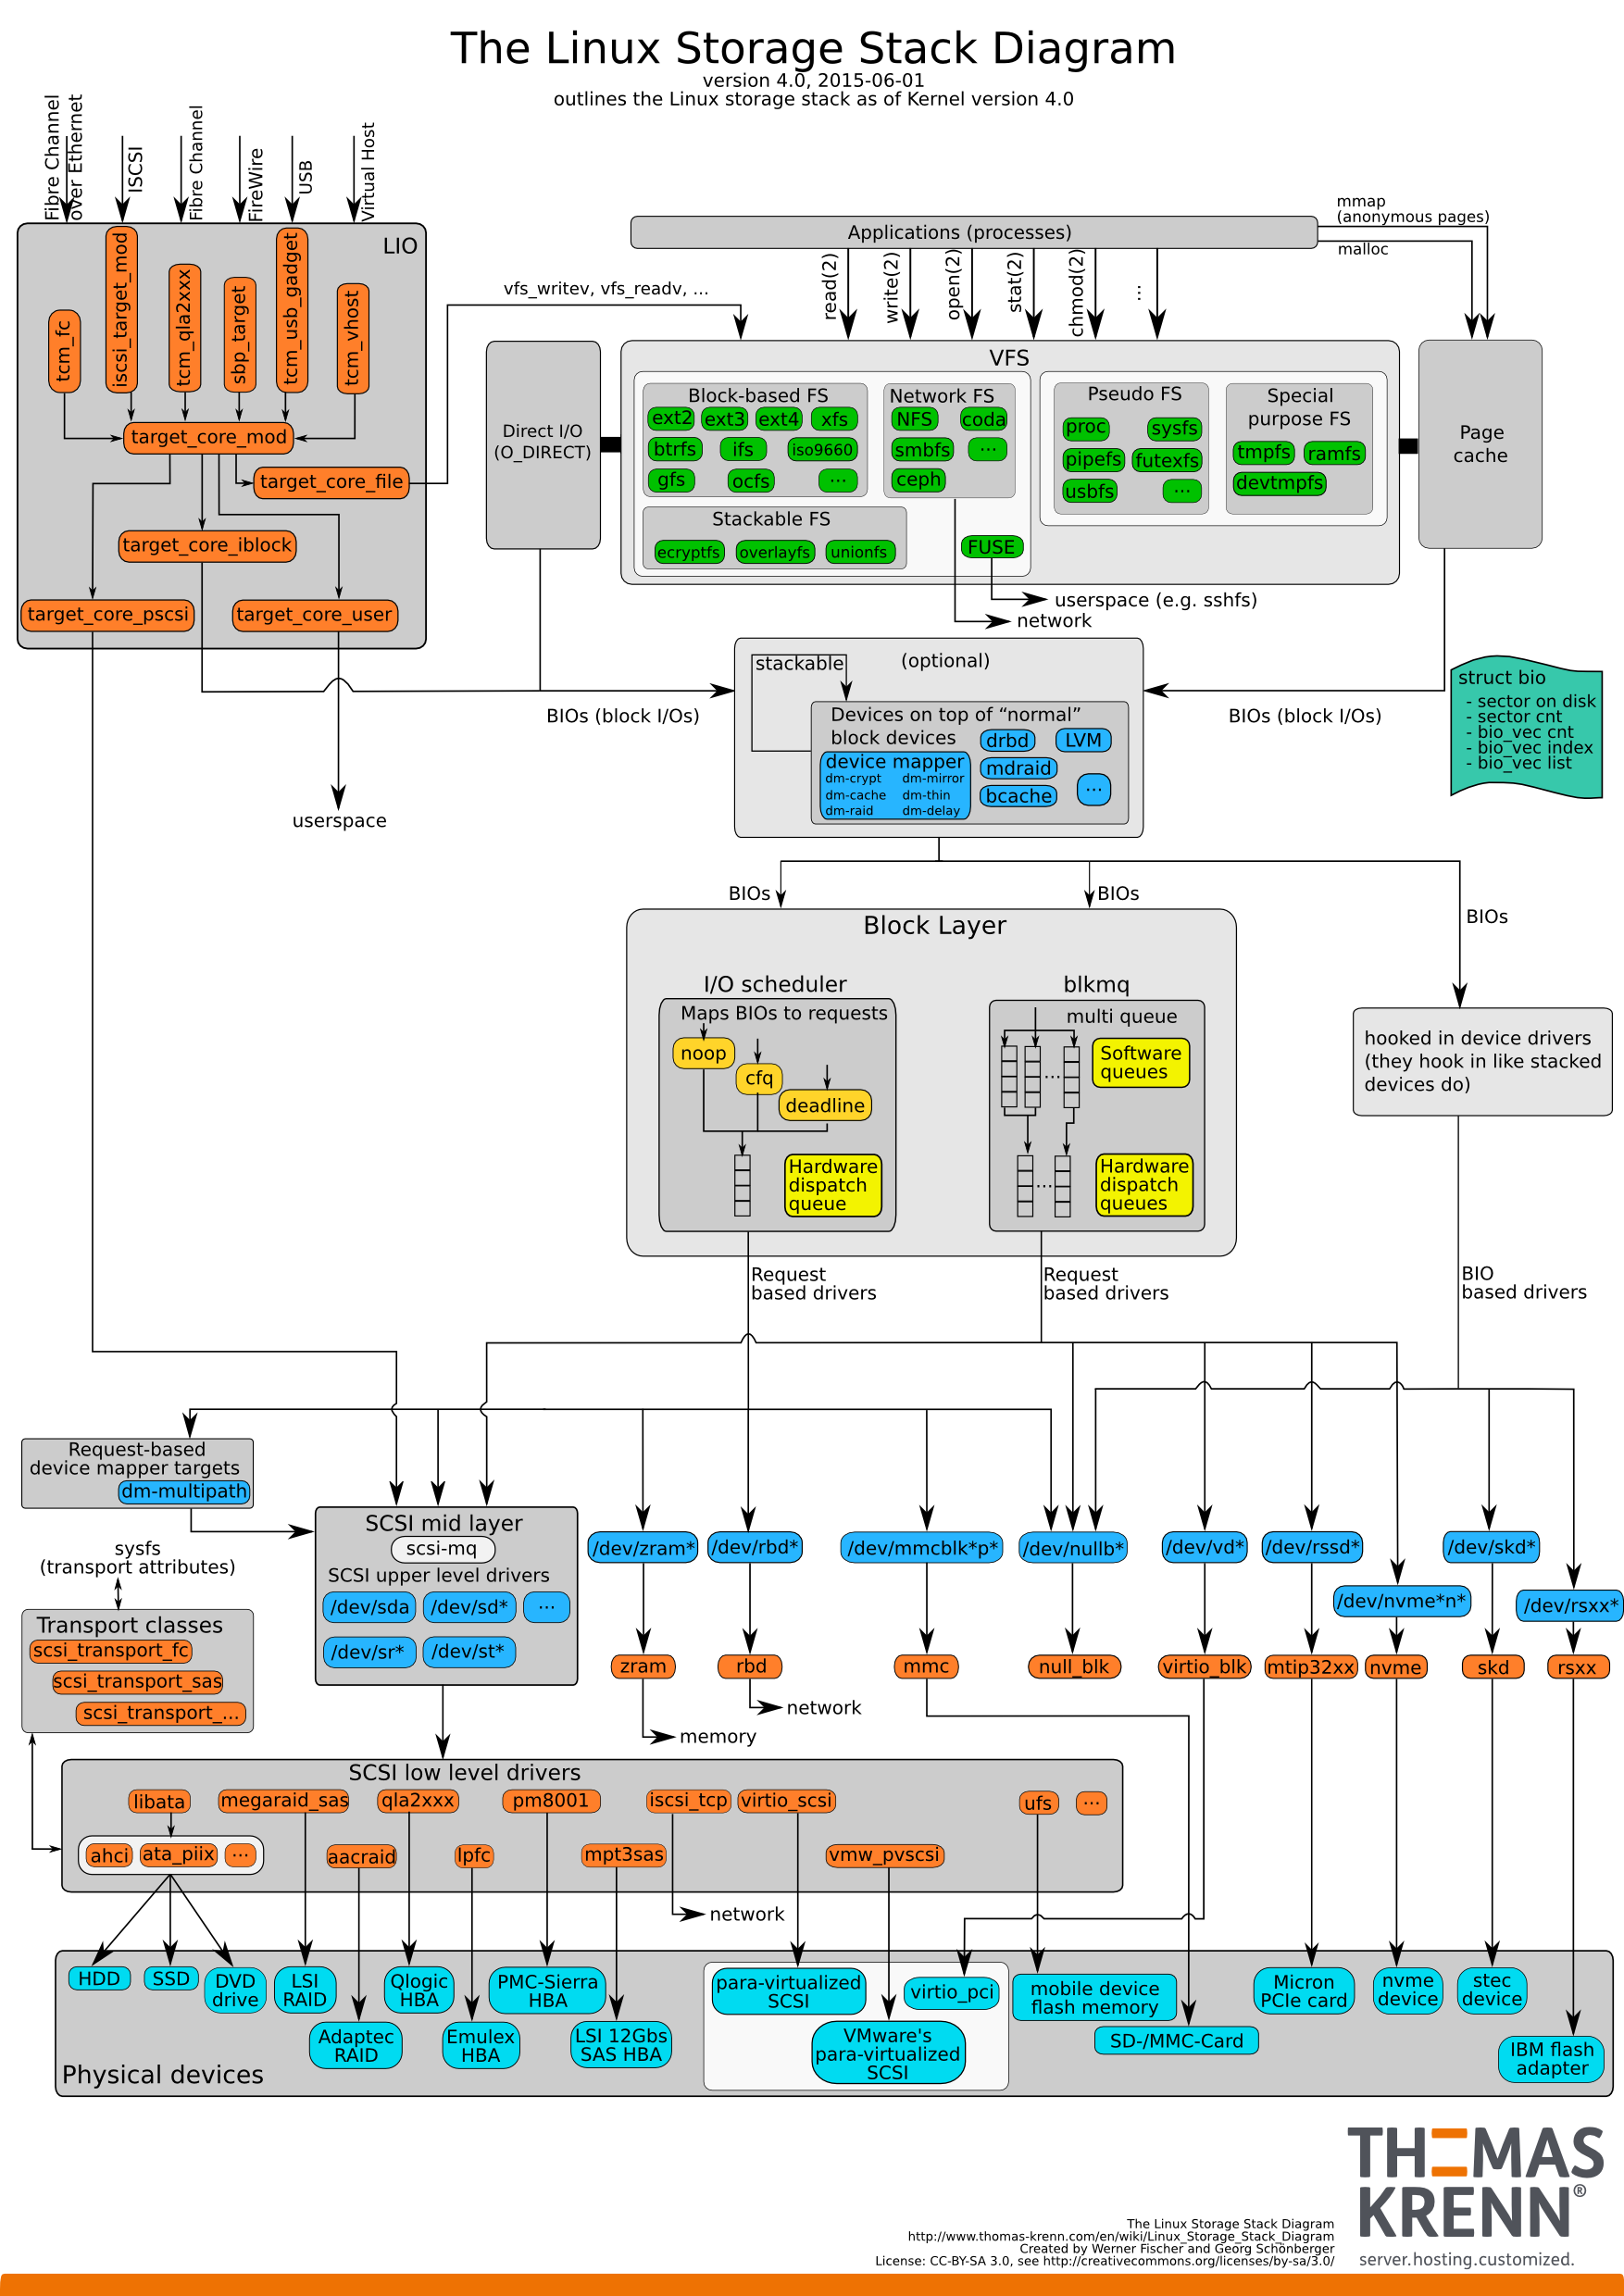 Linux-storage-stack-diagram_v4.0